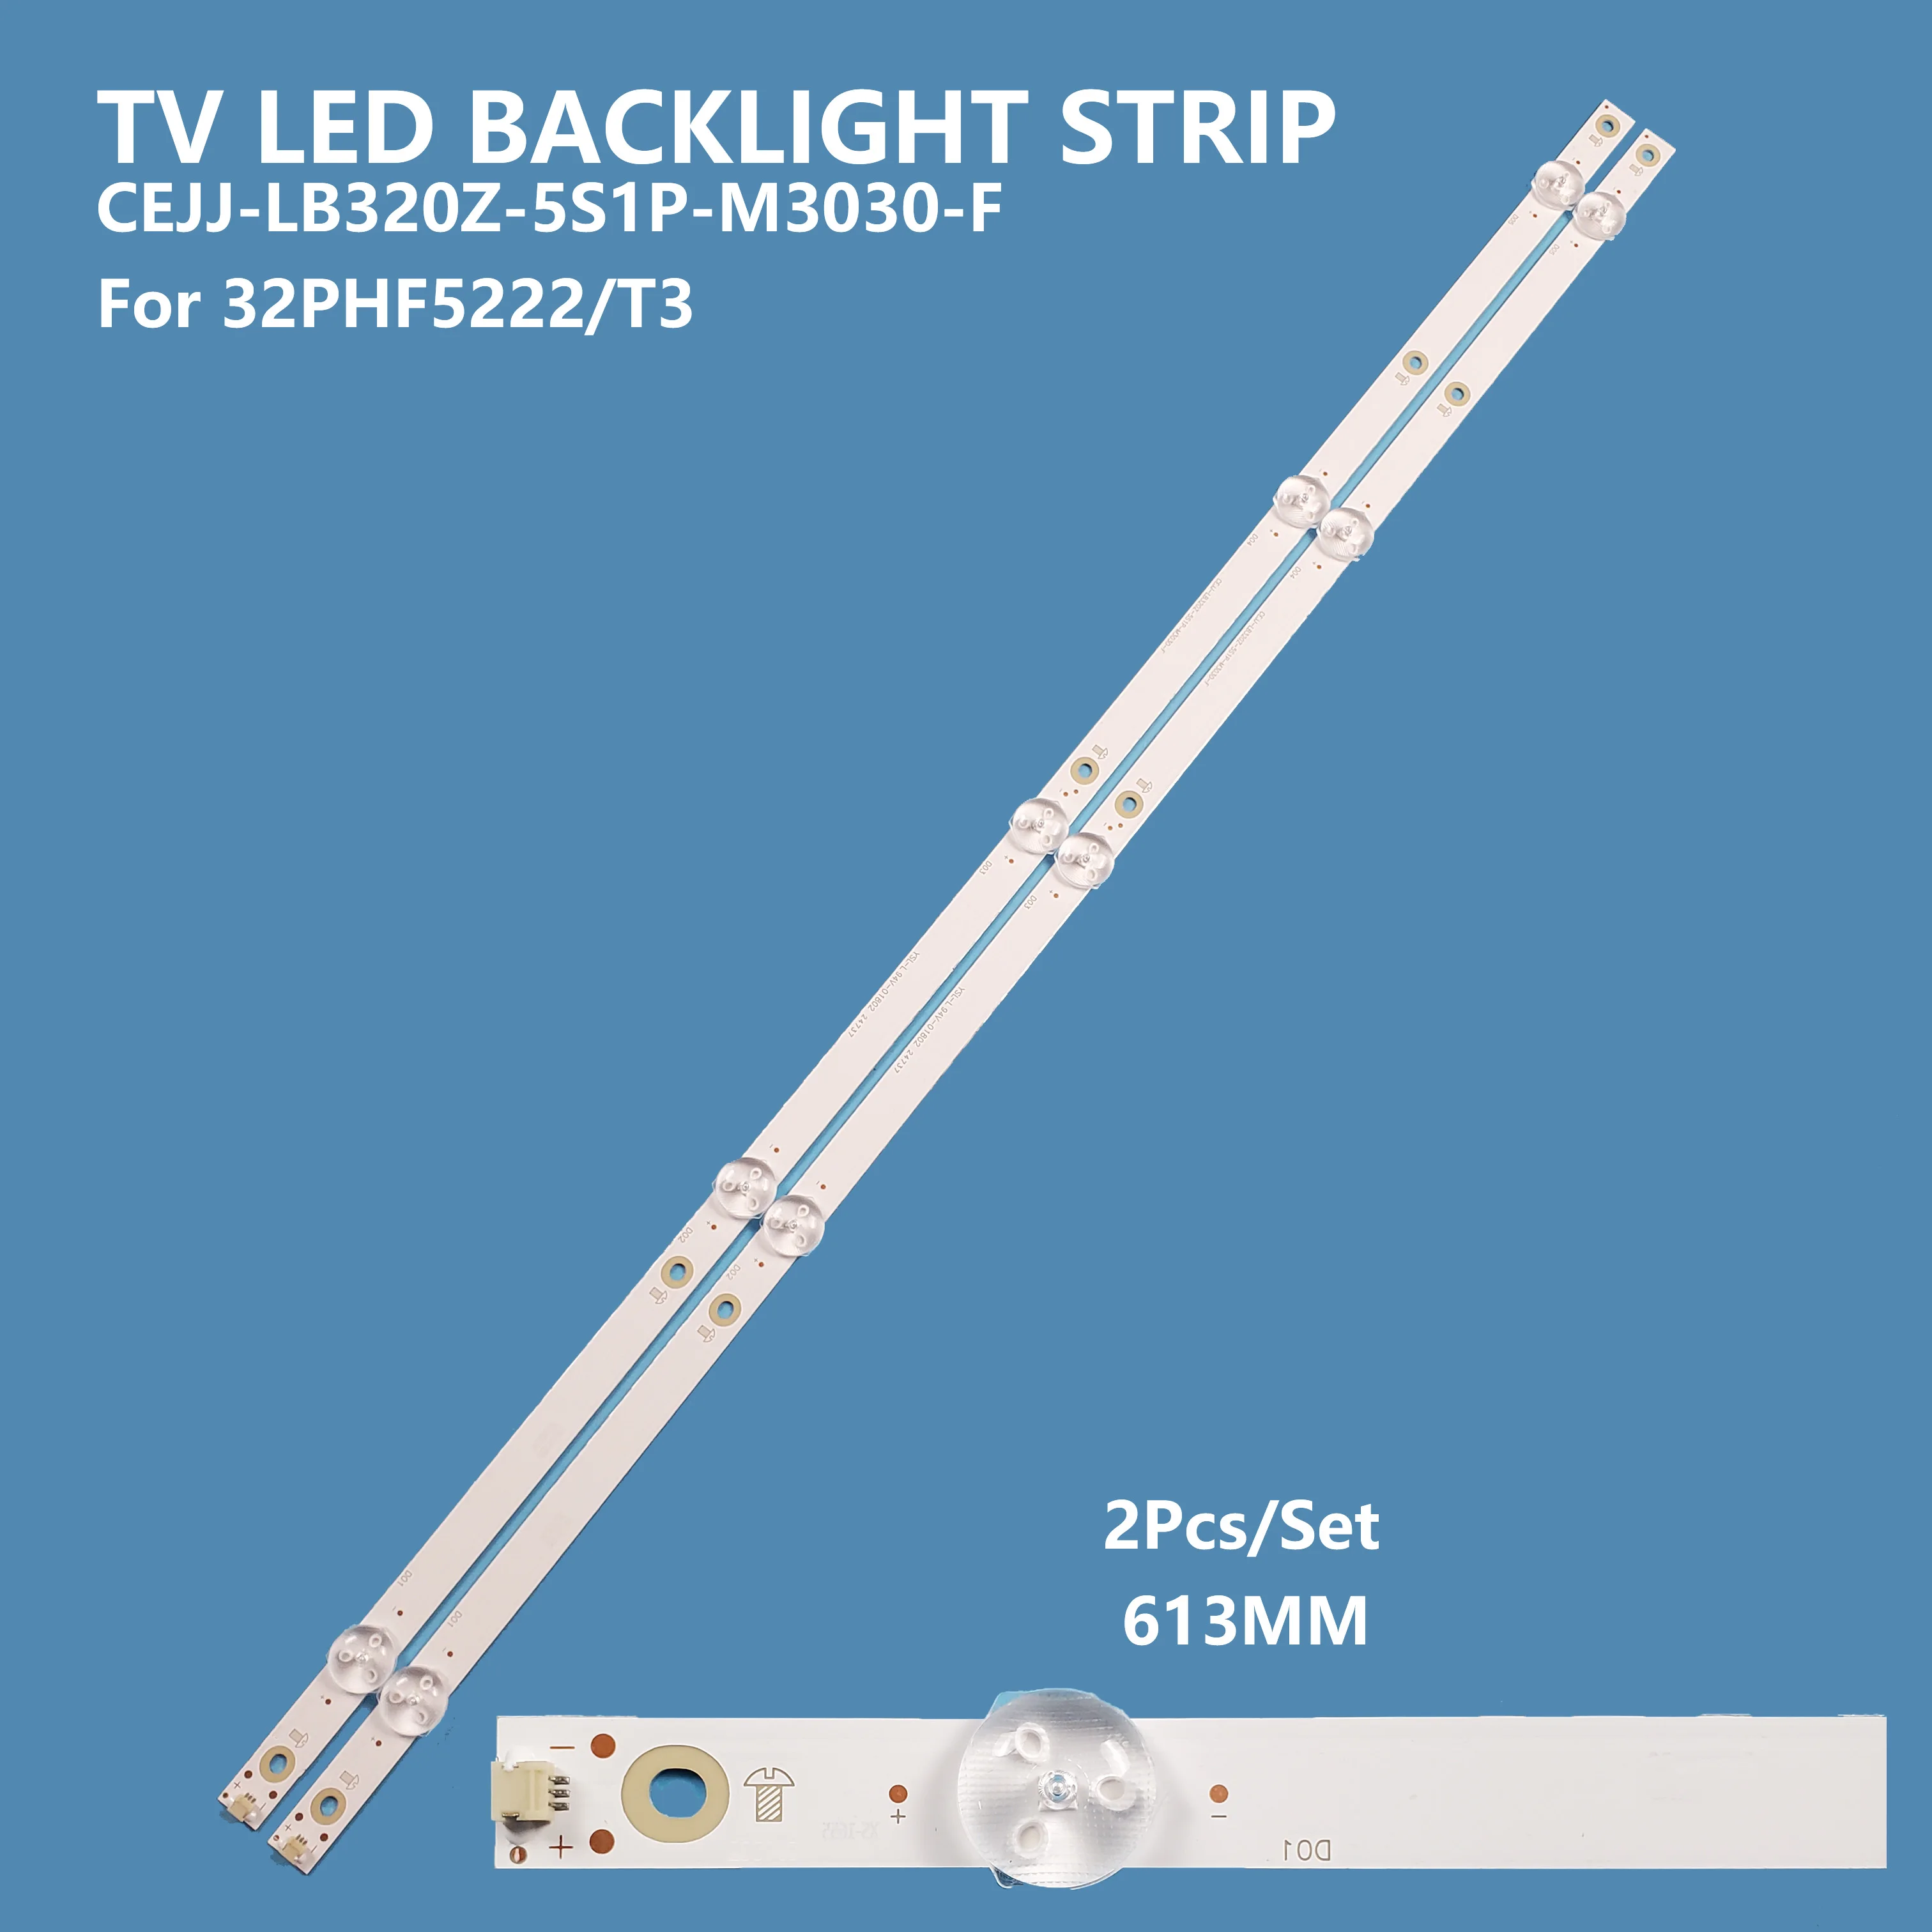 2PCS/set New Arrival TV Led Backlight Strip CEJJ-LB320Z-5S1P-M3030-F For PHILIPS 32inch 32PHF5222/T3 tv Bar Light Accessories 2pcs set tv led backlight bar strip side light aot 55 nu7300 nu7100 for samsung 55 inch ua55nu7300jxxz ua55nu7300 ue55nu7450